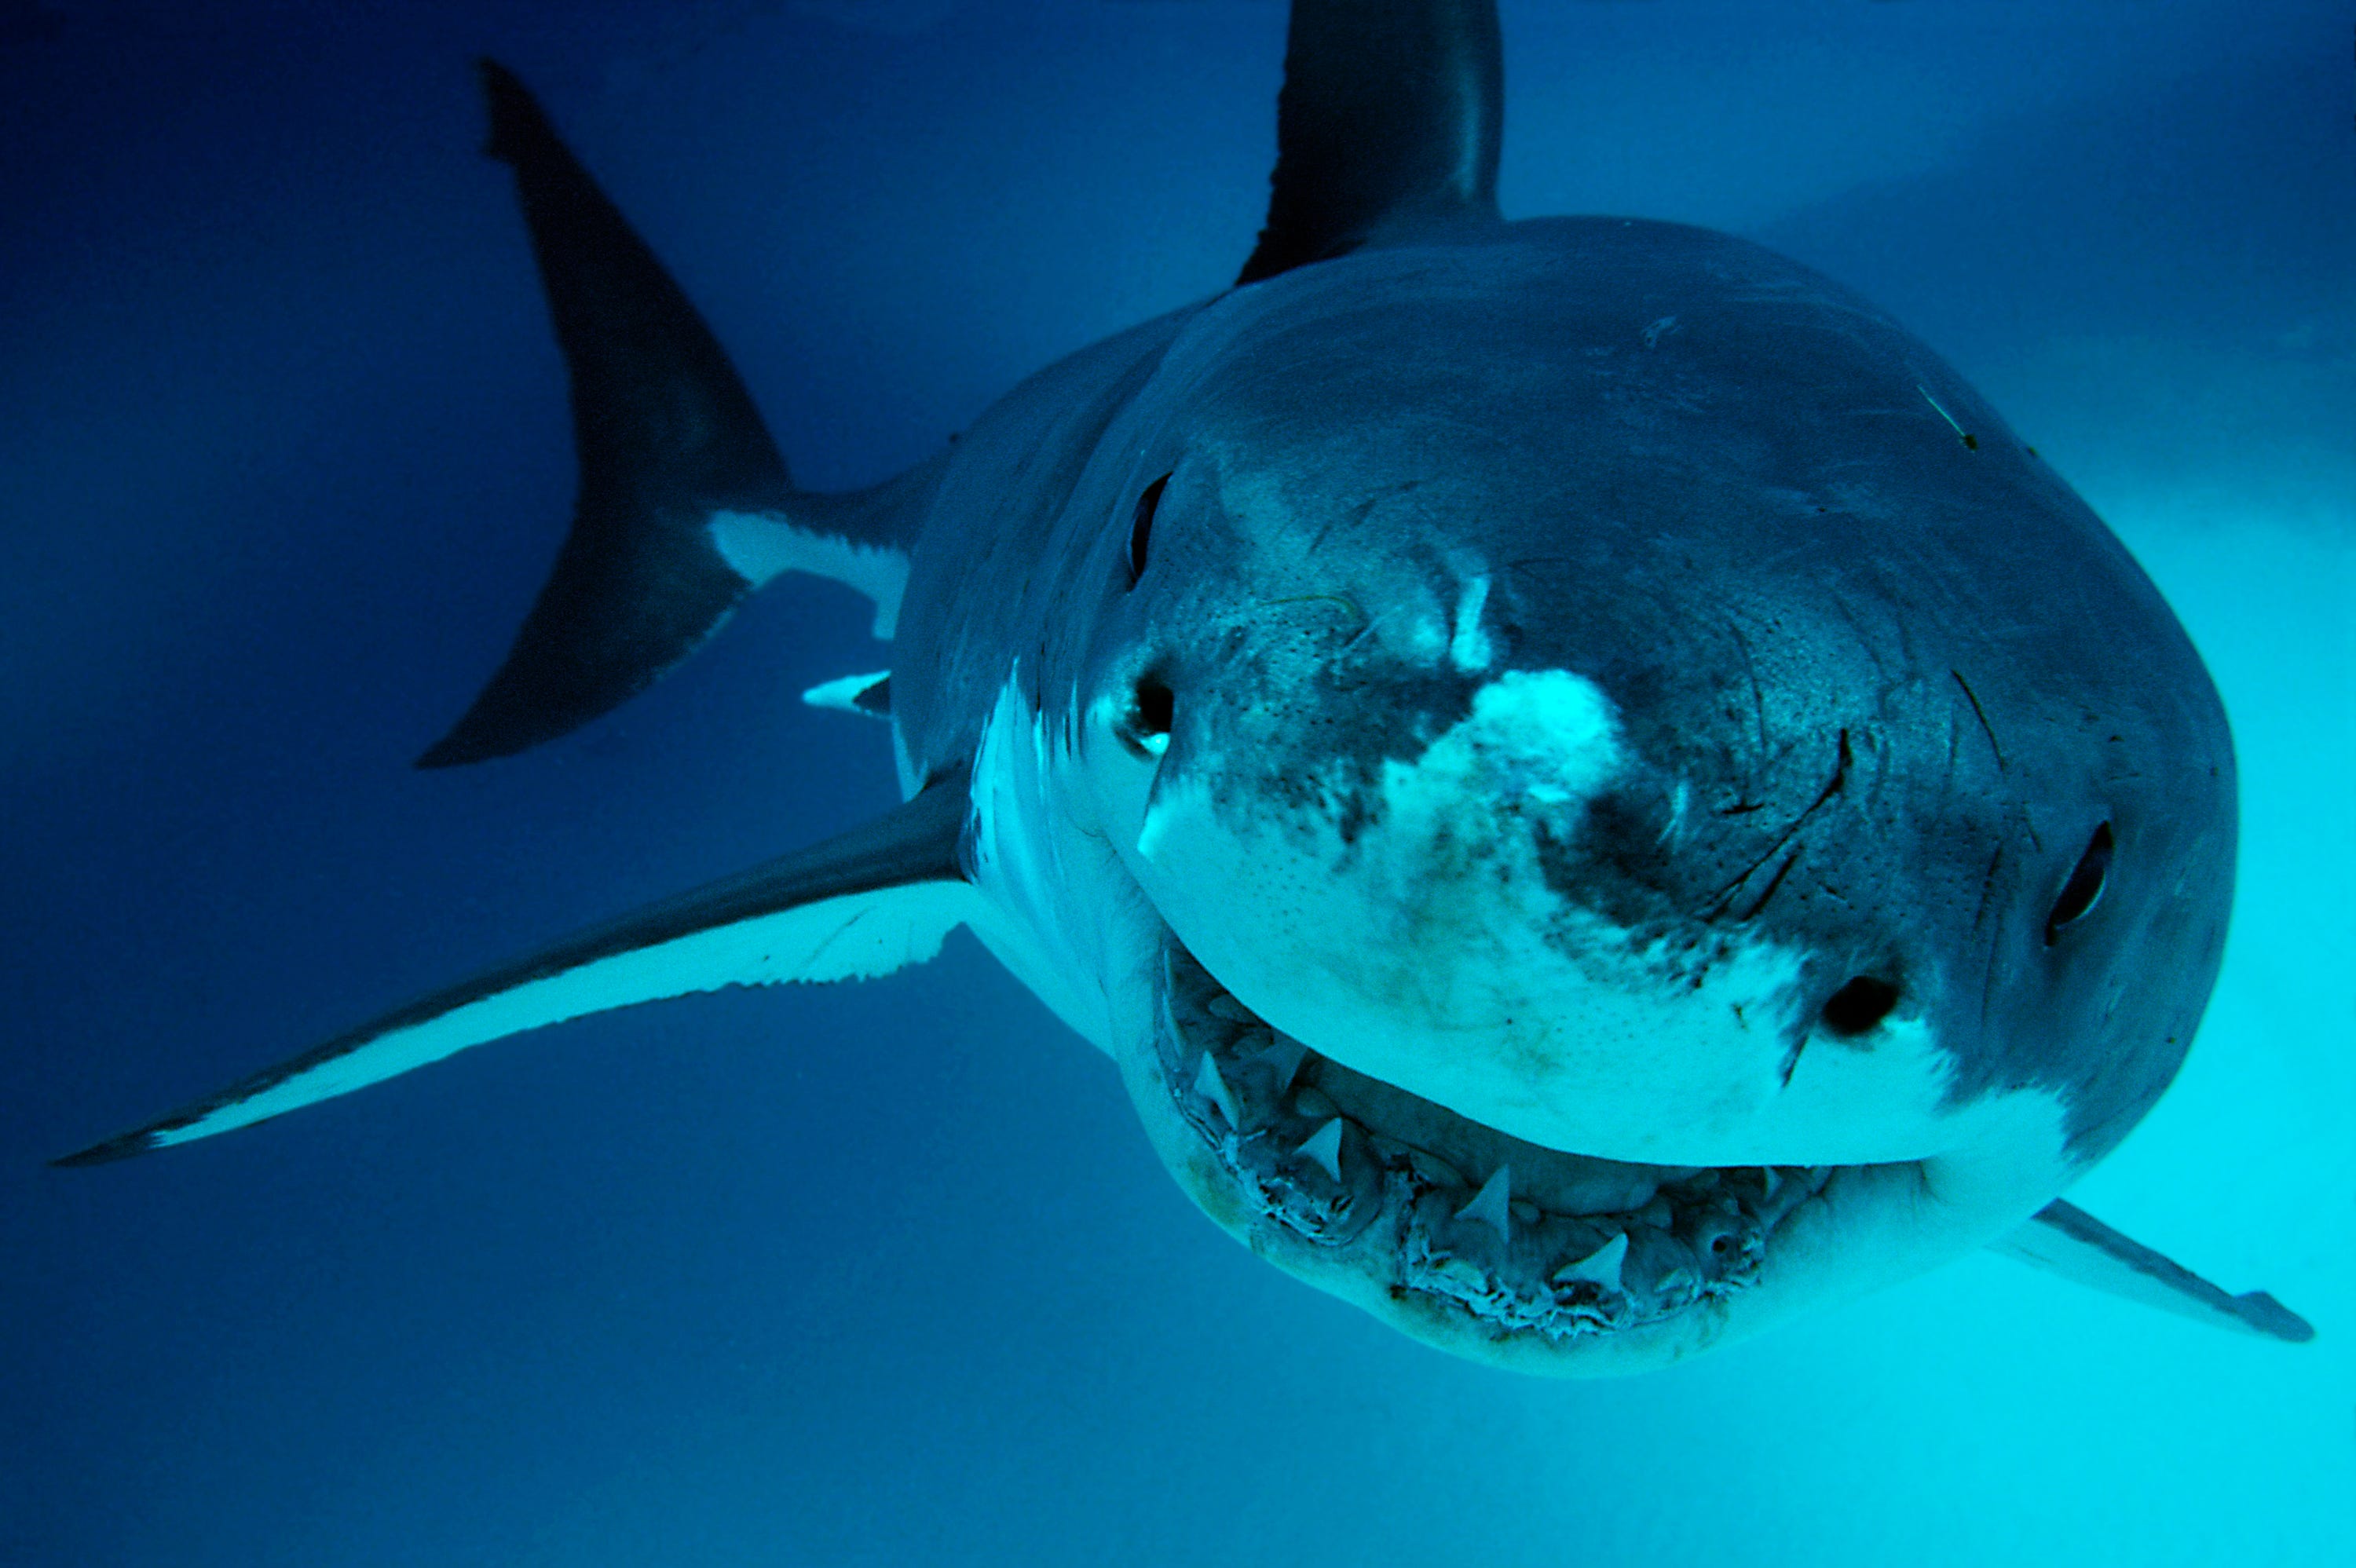 Scary shark. Тихоокеанская сельдевая акула. Атлантическая сельдевая акула. Дип Блю акула. Белая акула дип Блю.